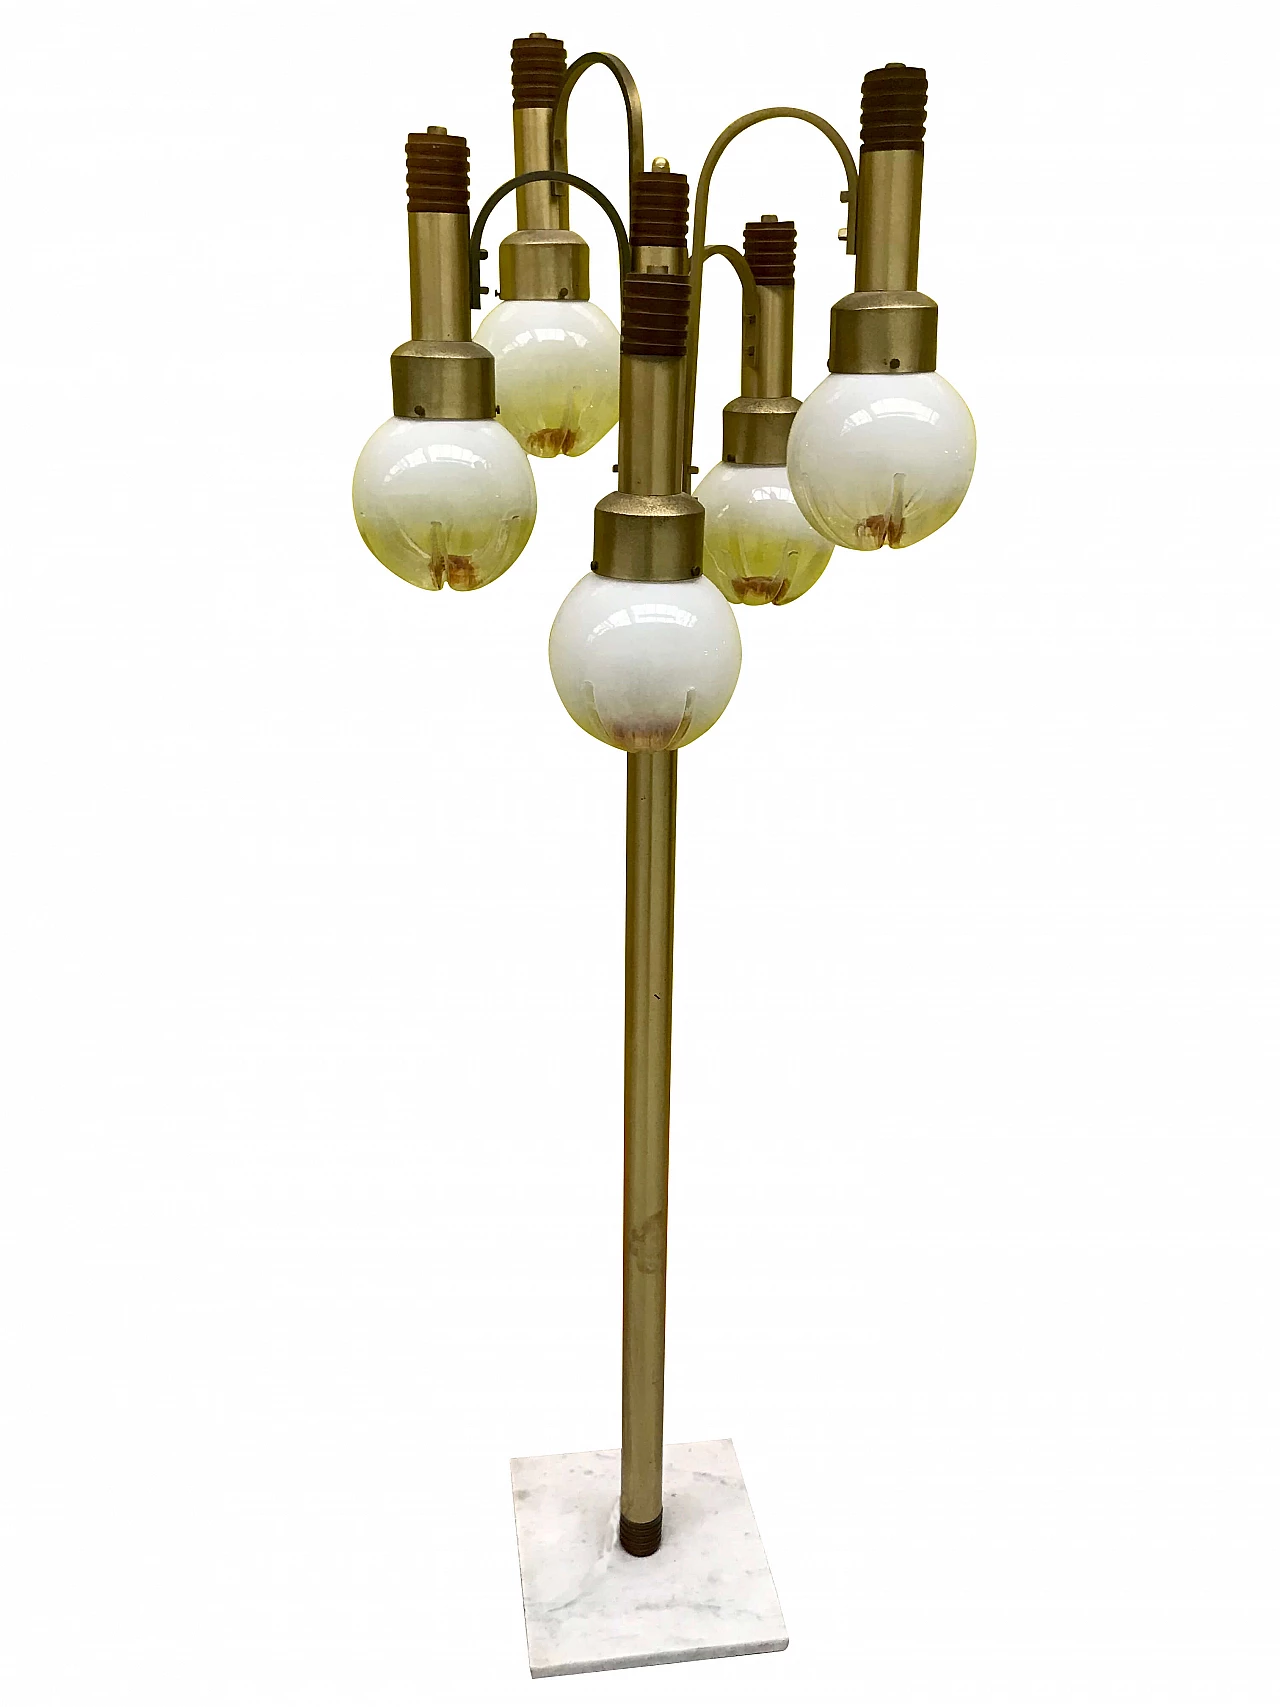 Waterfall floor lamp with 5 globular Murano glass lights, gilded brass stem, wood and marble base, original 60s - 70s 1232192